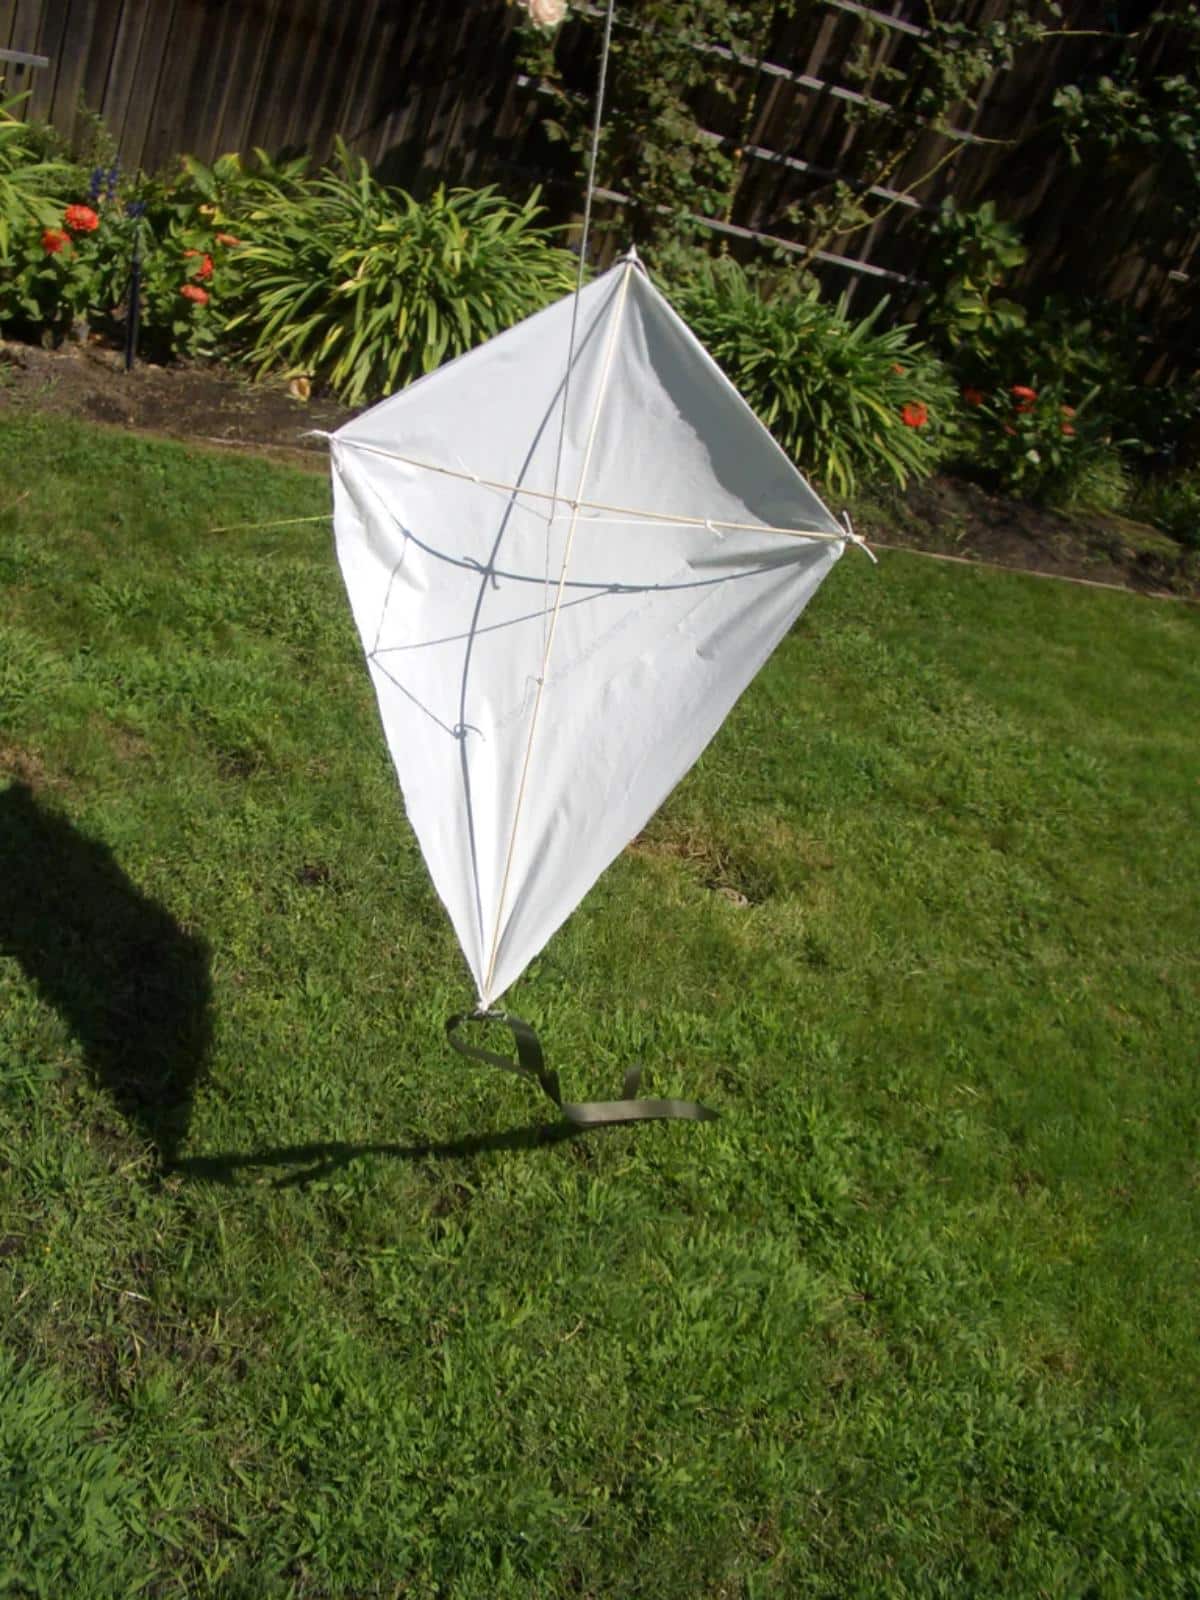 Make A Diamond Kite Using a Plastic Bag.